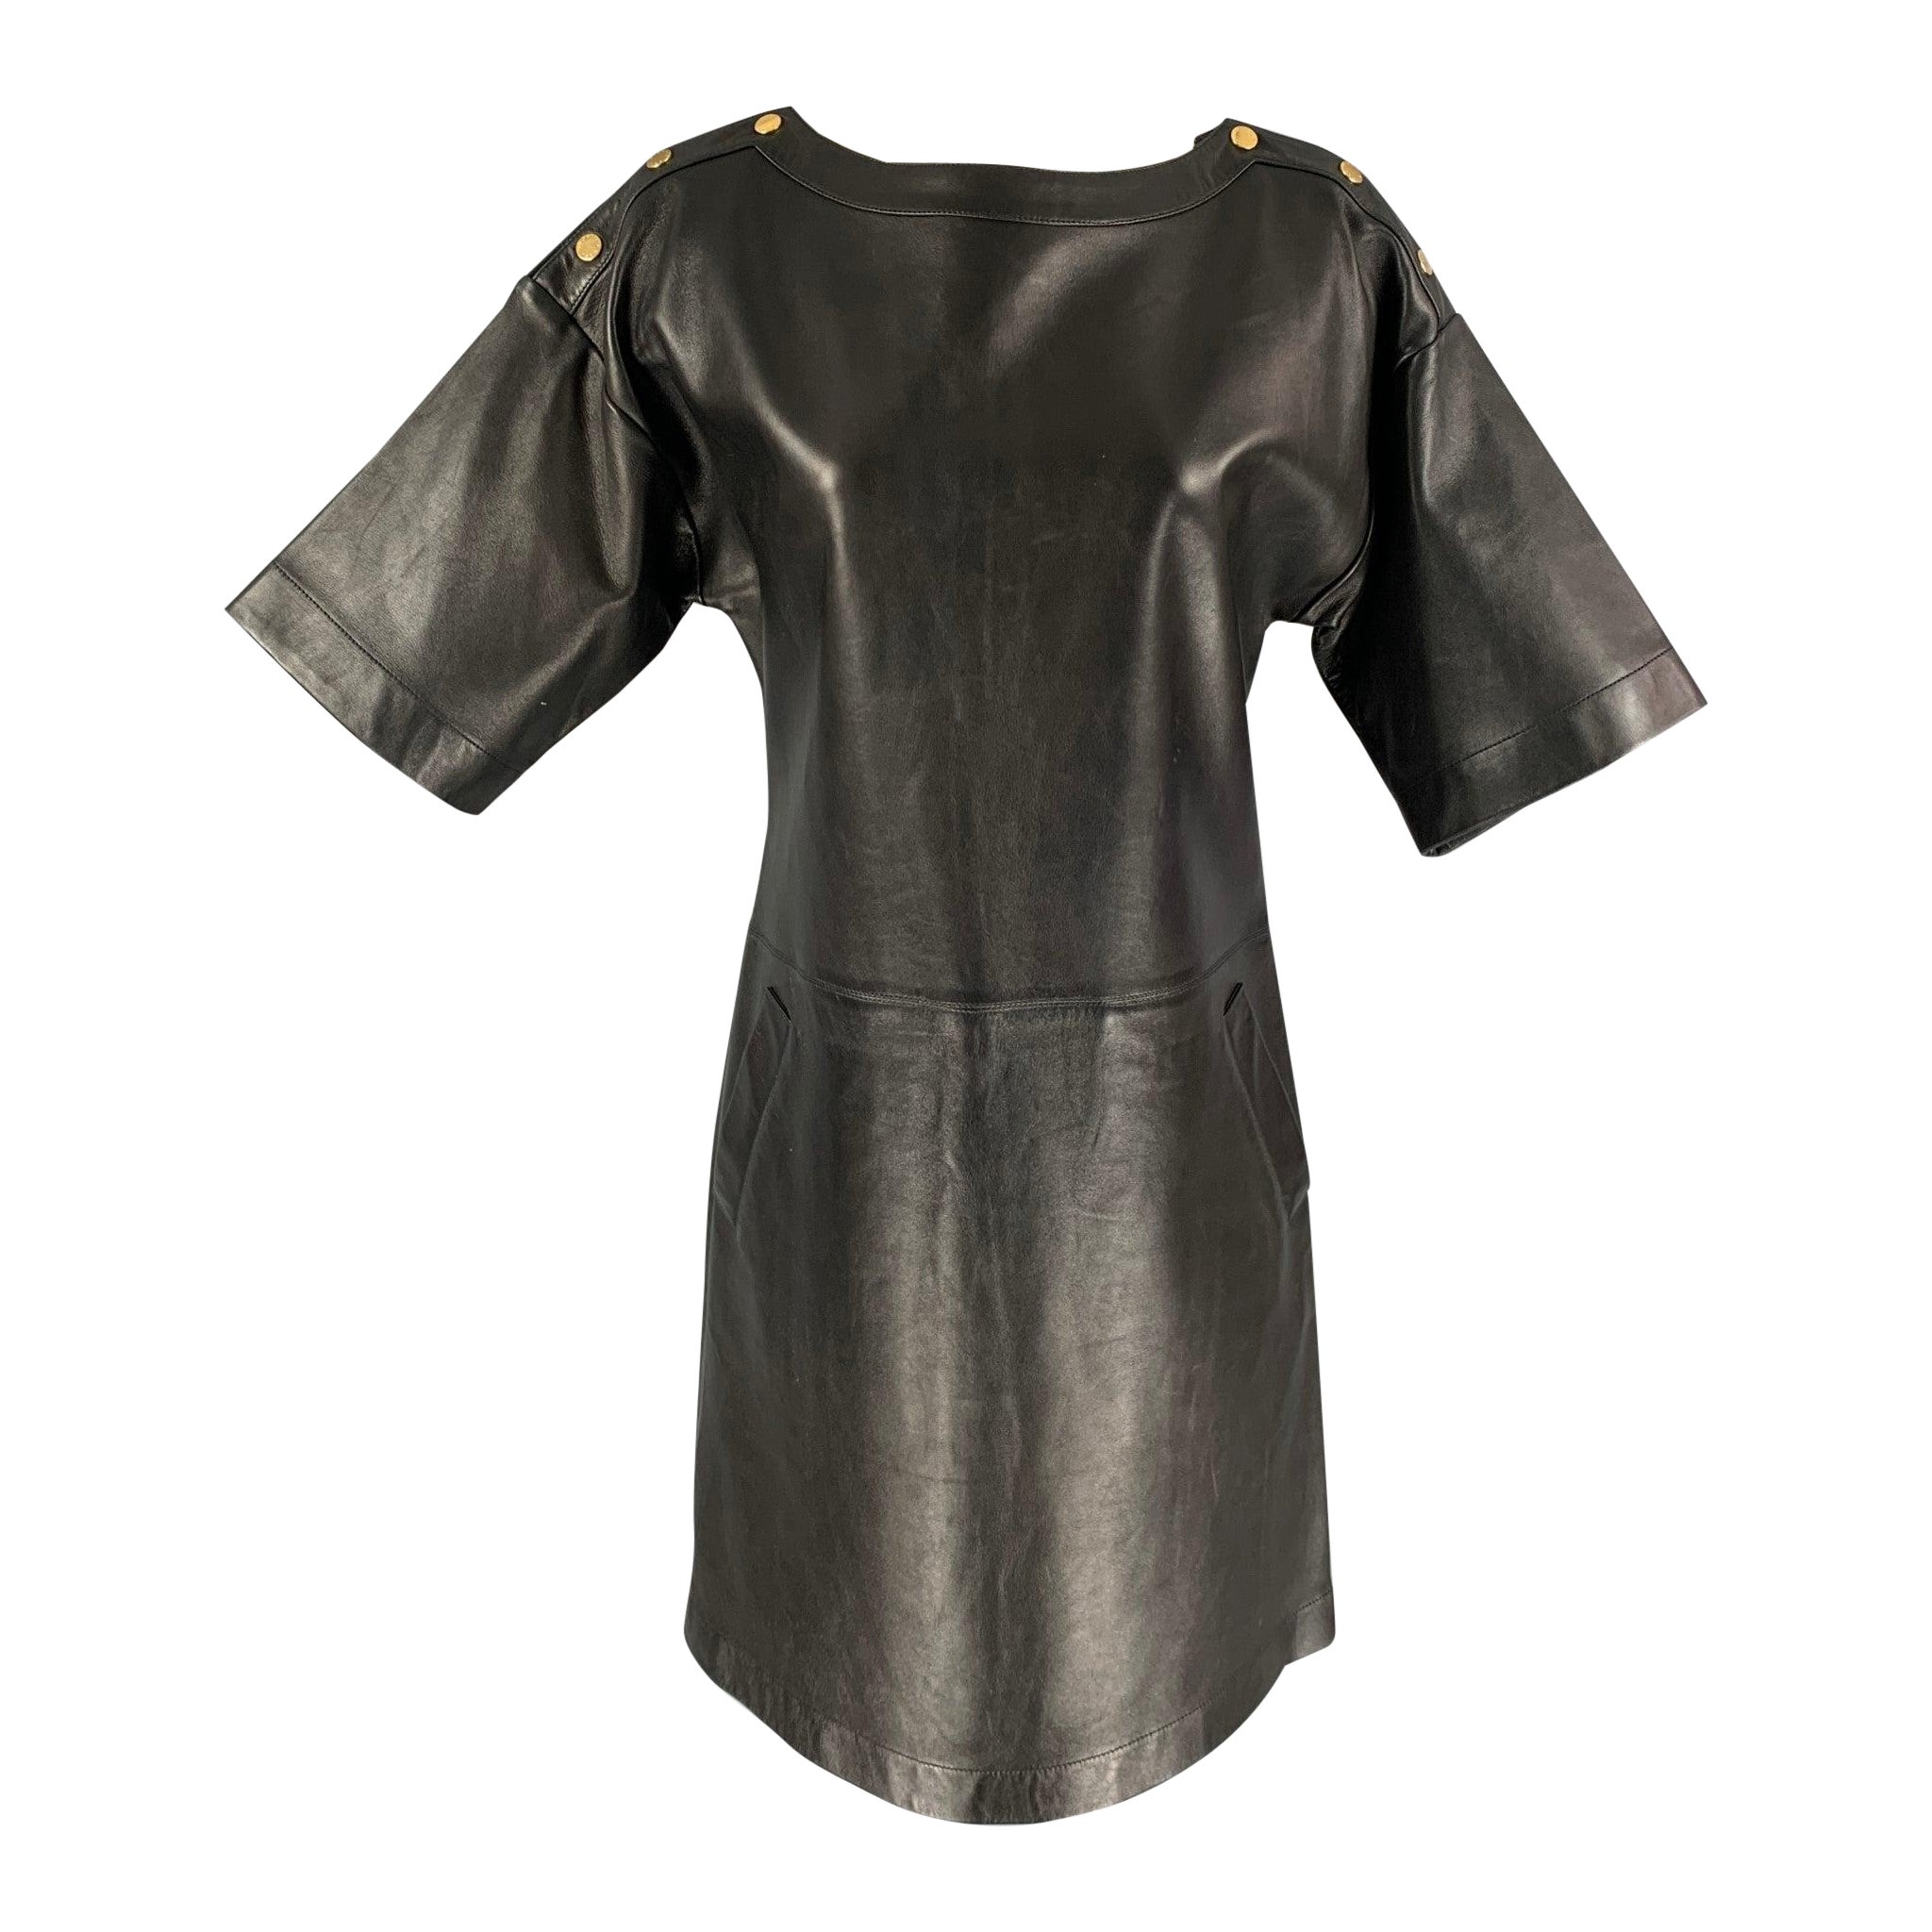 MICHAEL KORS Size 4 Black Leather Short Sleeve Below Knee Dress For Sale